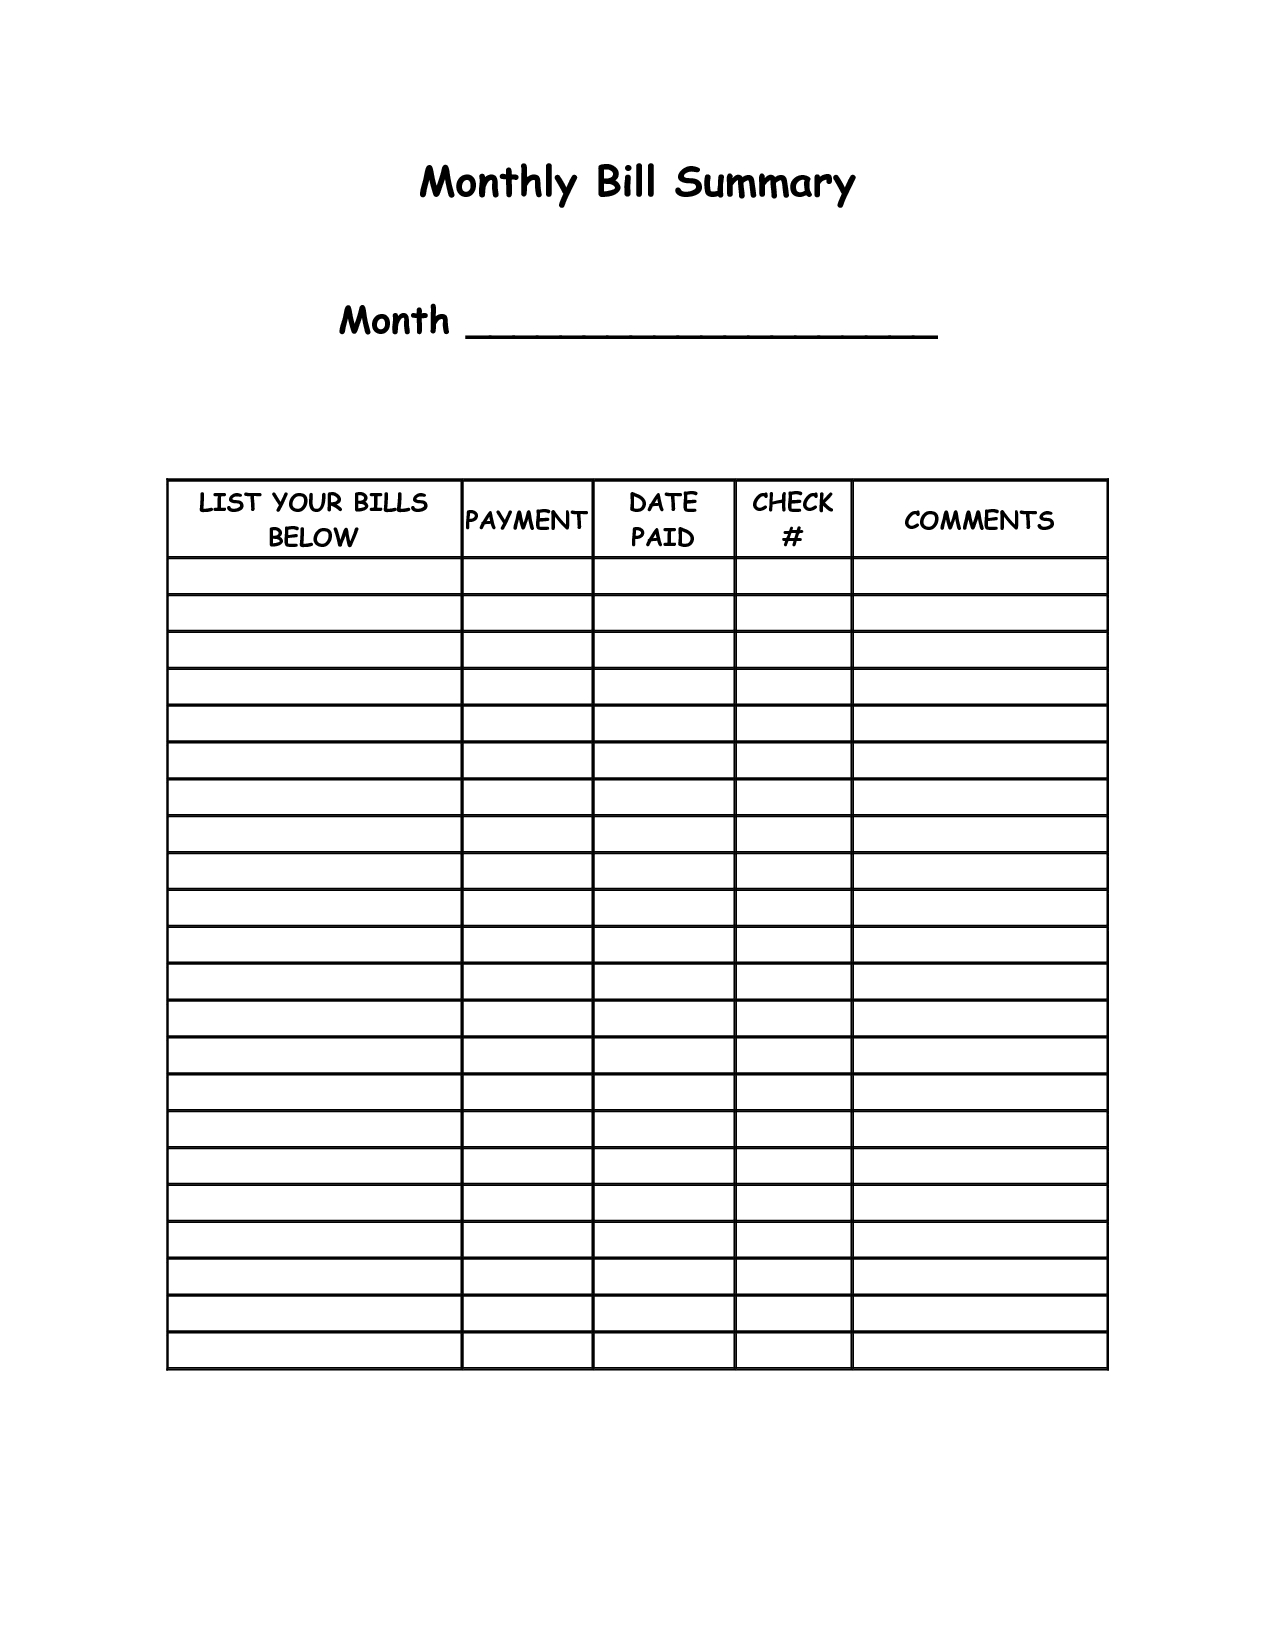 Monthly Bill Summary Doc | Organizing Monthly Bills, Bill-Blank Calendar To List Bills Due